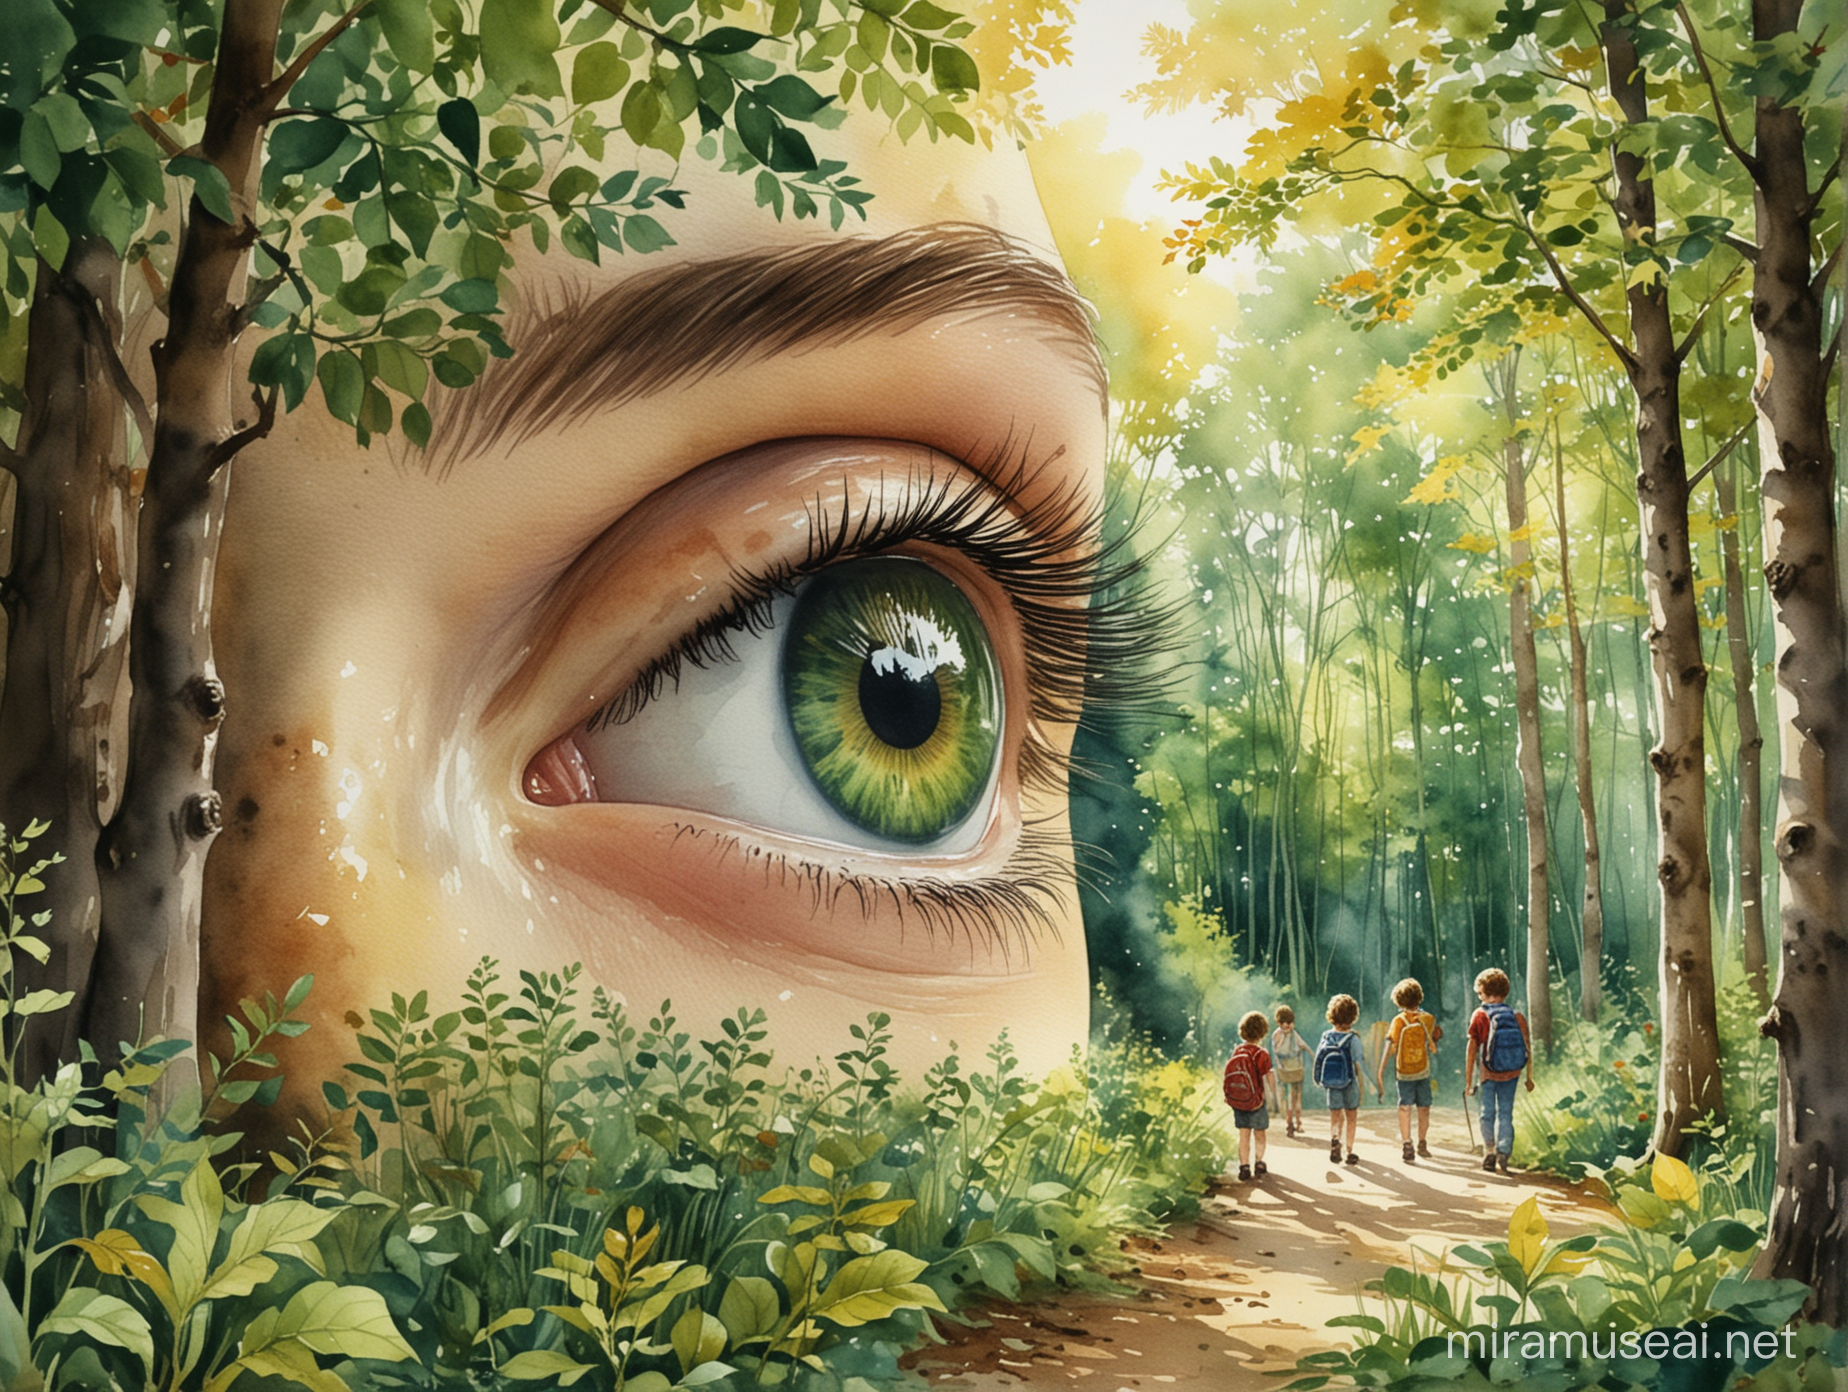 Renaissance Watercolor Children Exploring Nature in Sunlit Forests